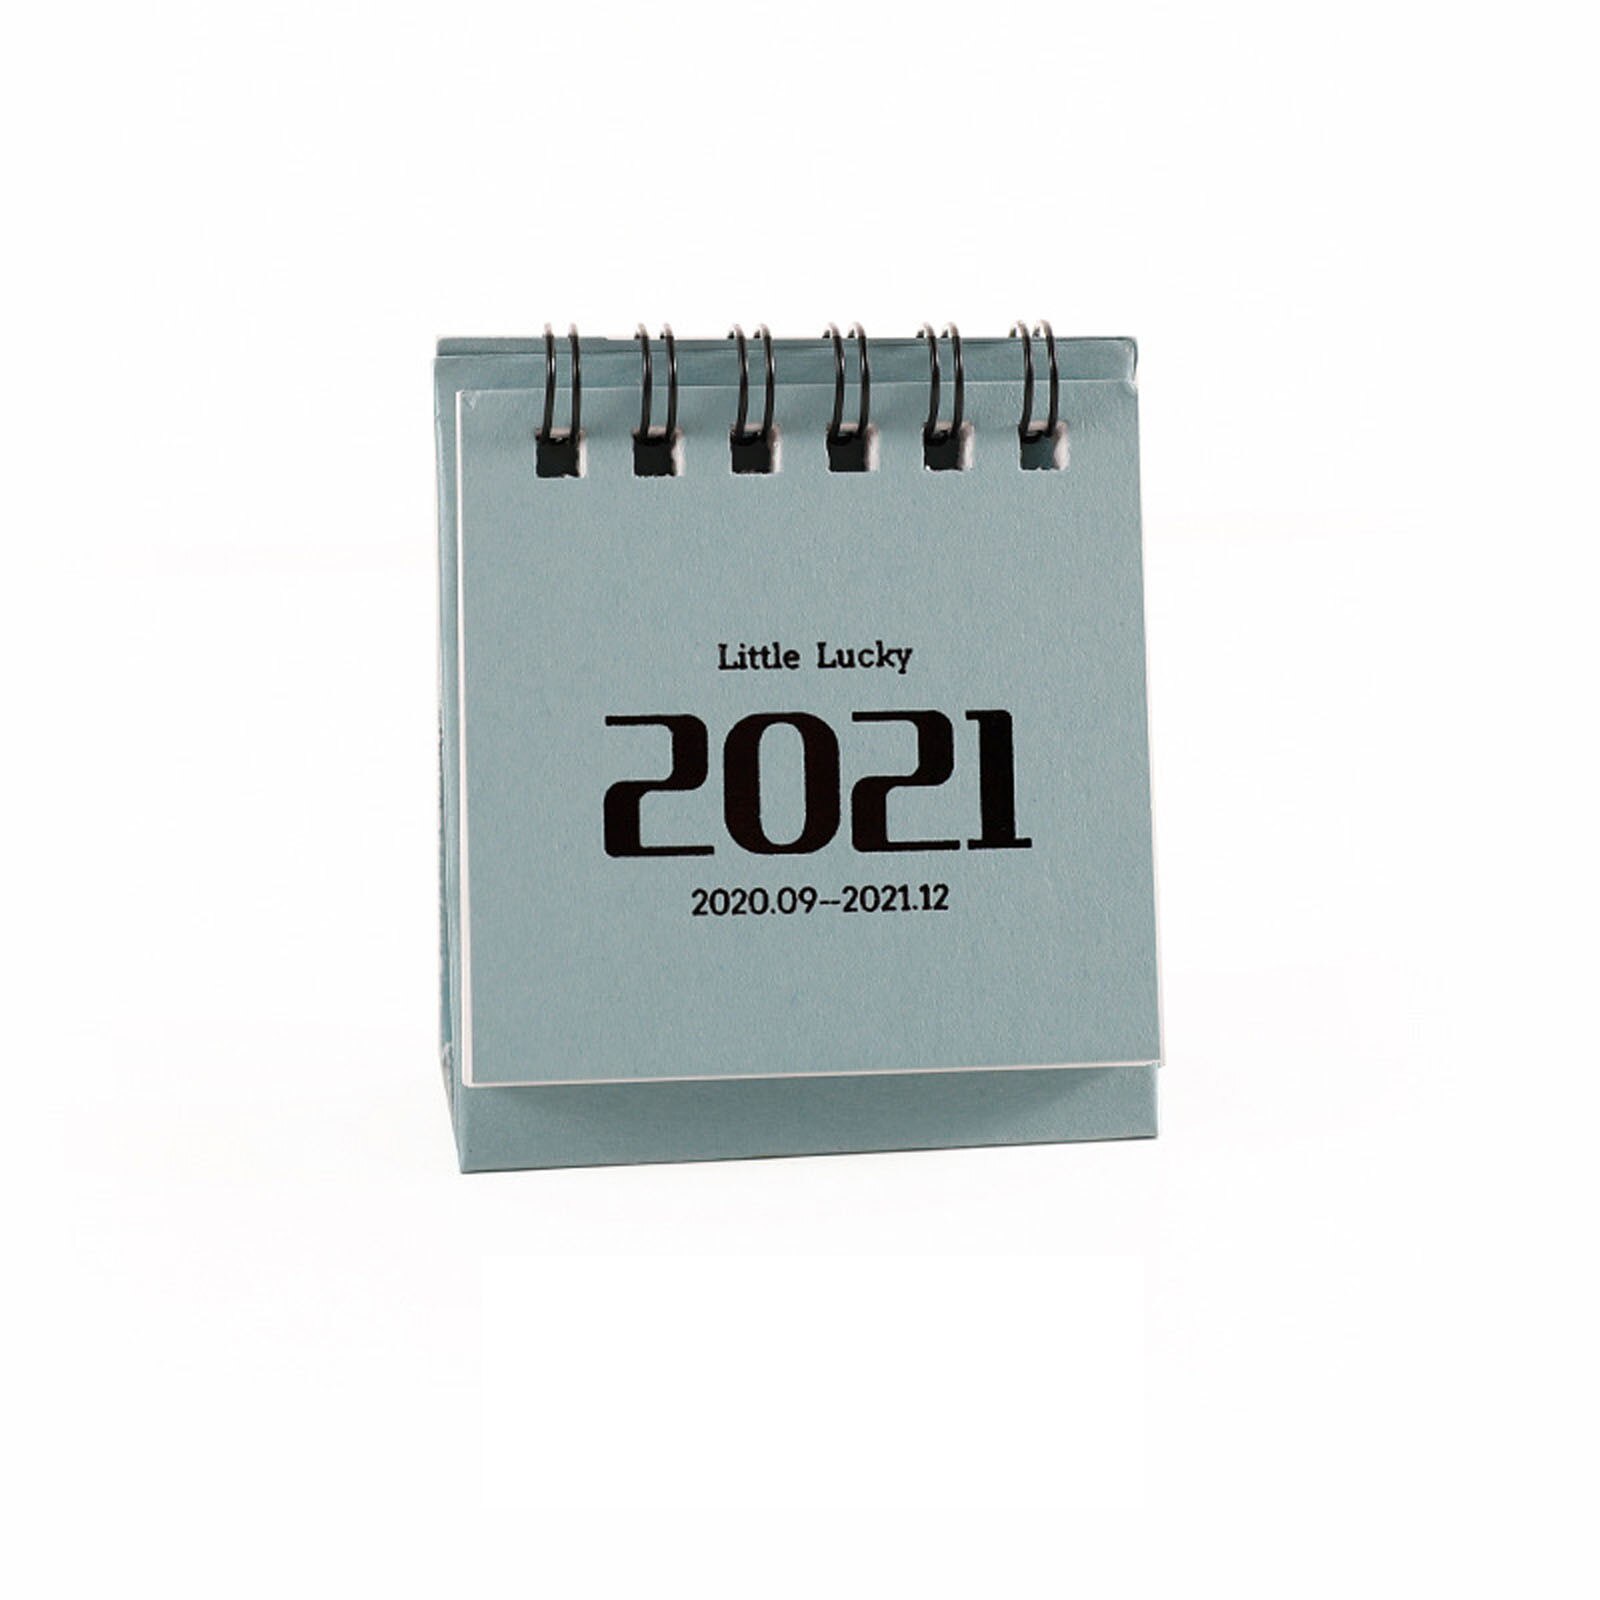 Minimalism Plan Book Mini Desk Calendar DIY Portable Desk Calendars Stand Up Flip Daily Monthly Schedule Planner: A